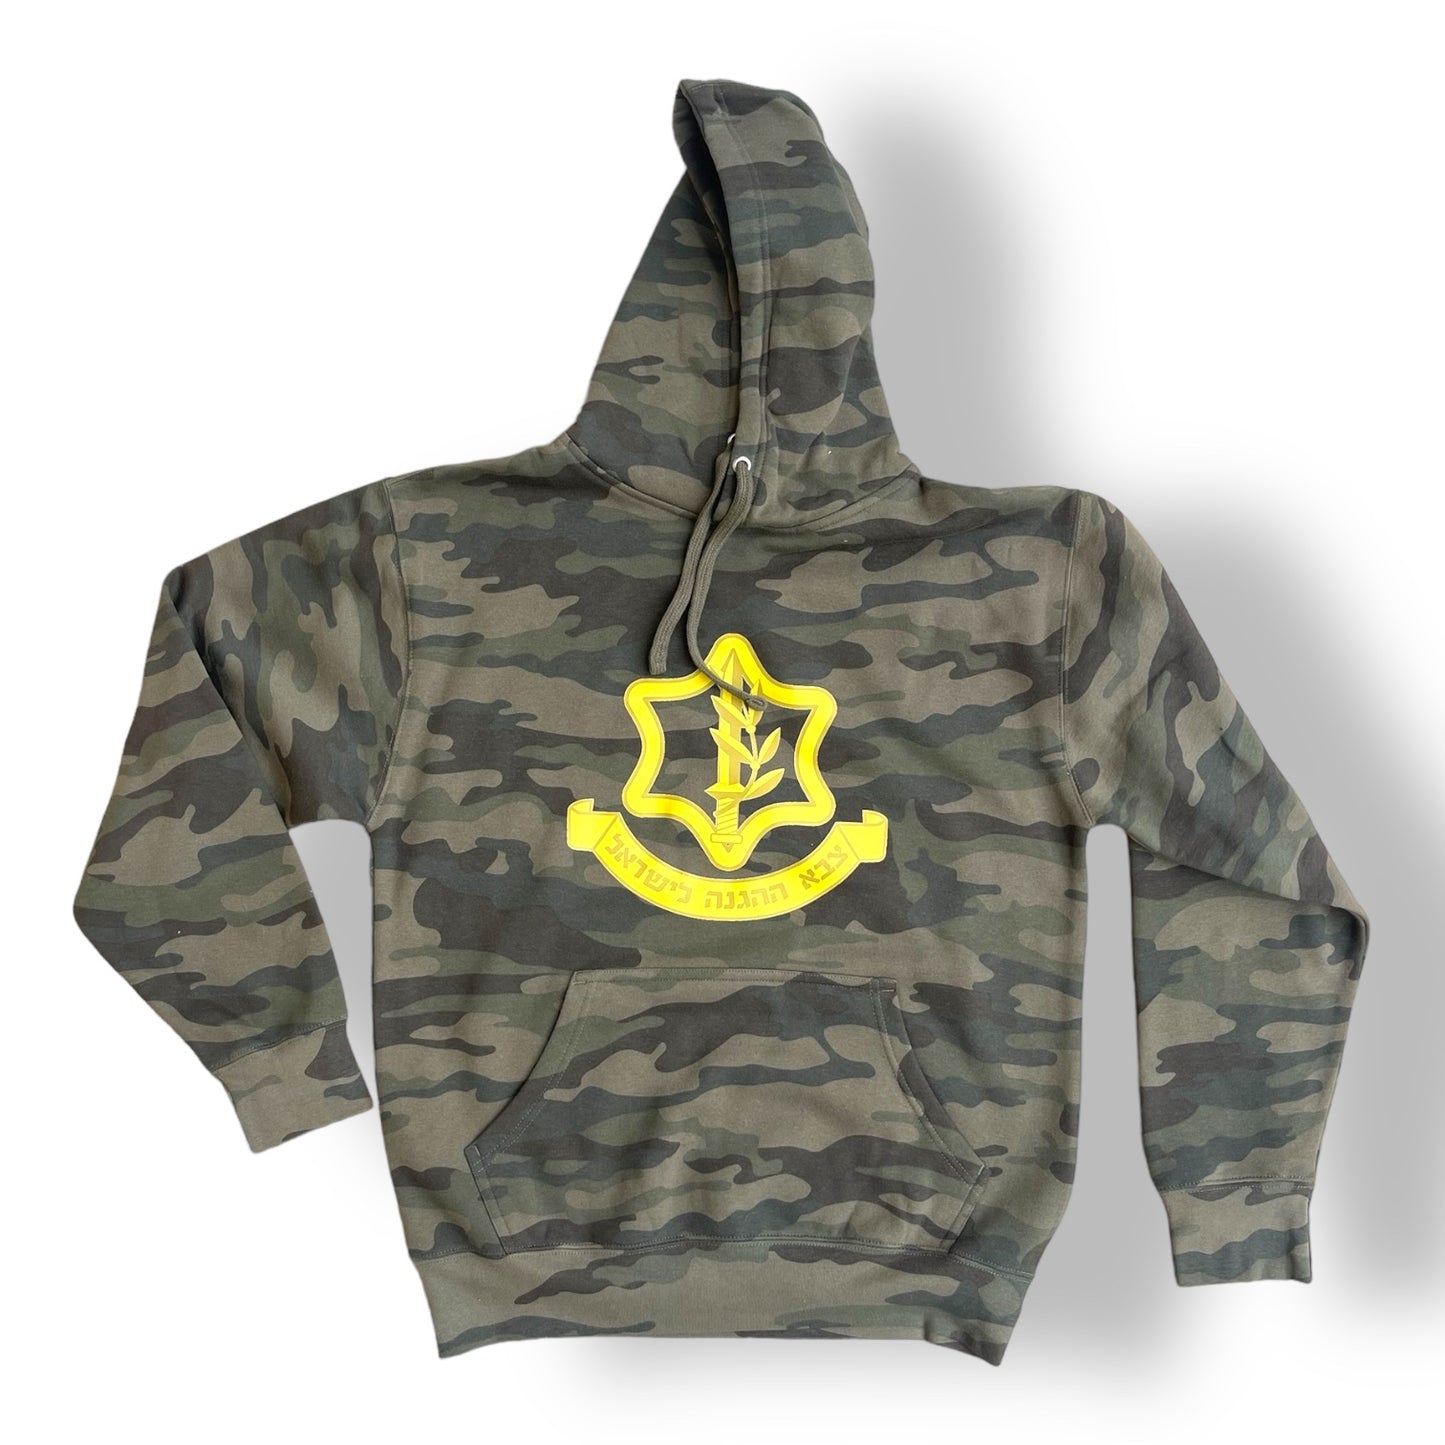 Idf צ׳ה״ל camouflage hoodie